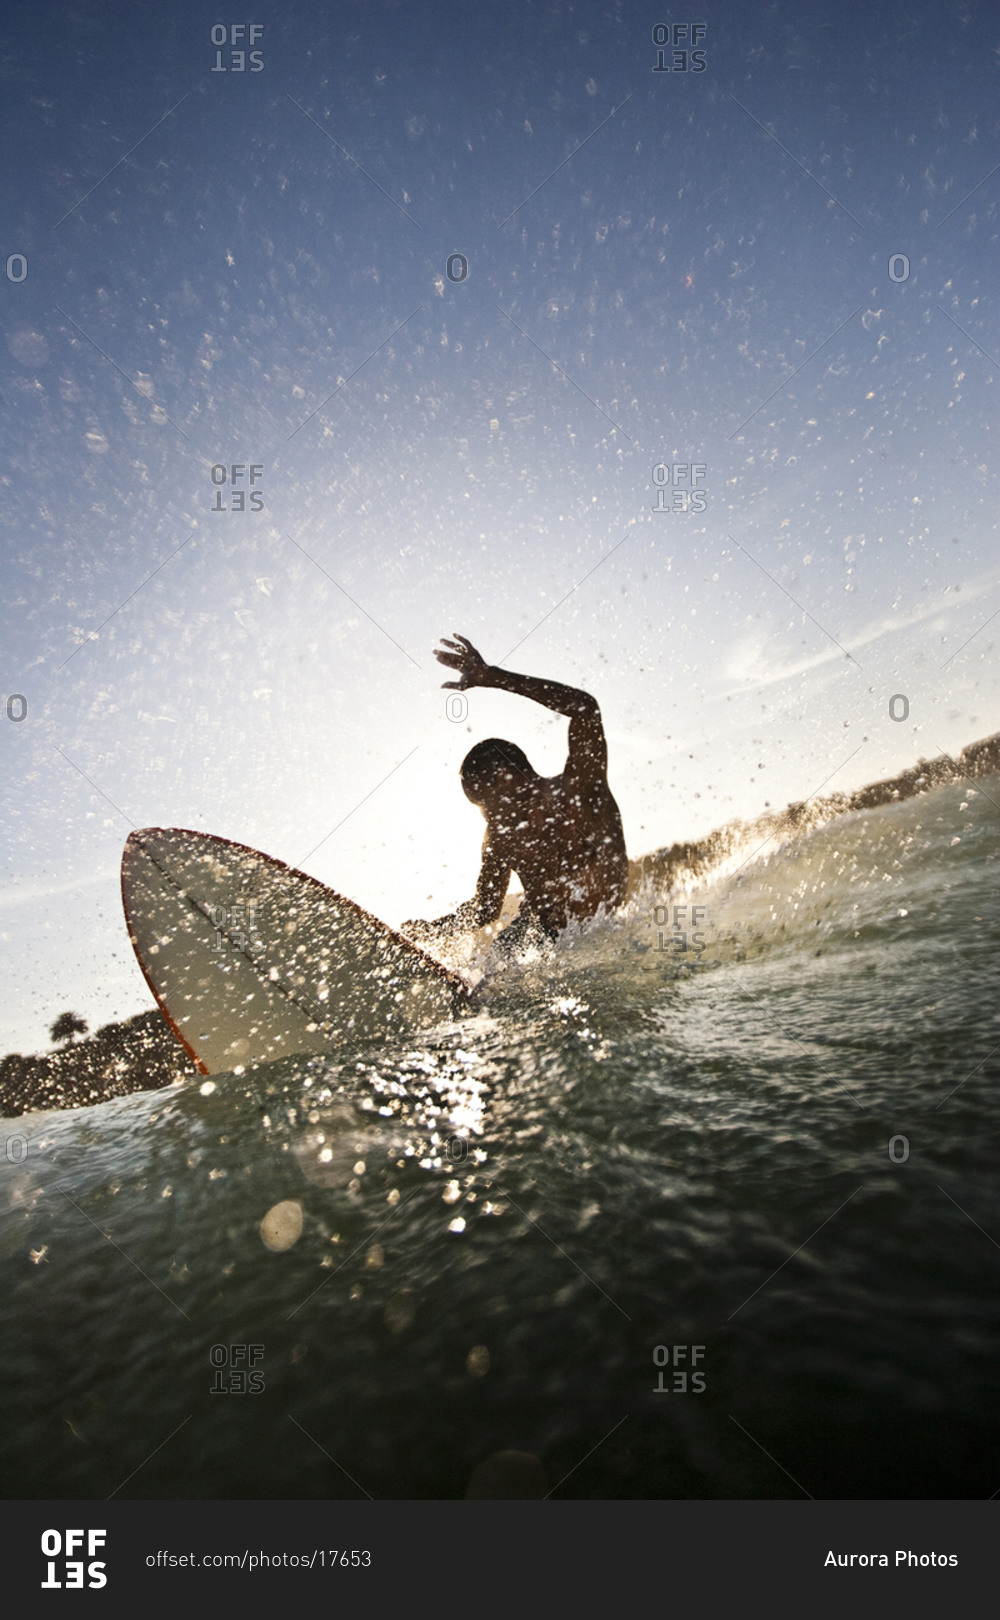 Man surfing in southern California. San Diego, California surfing.